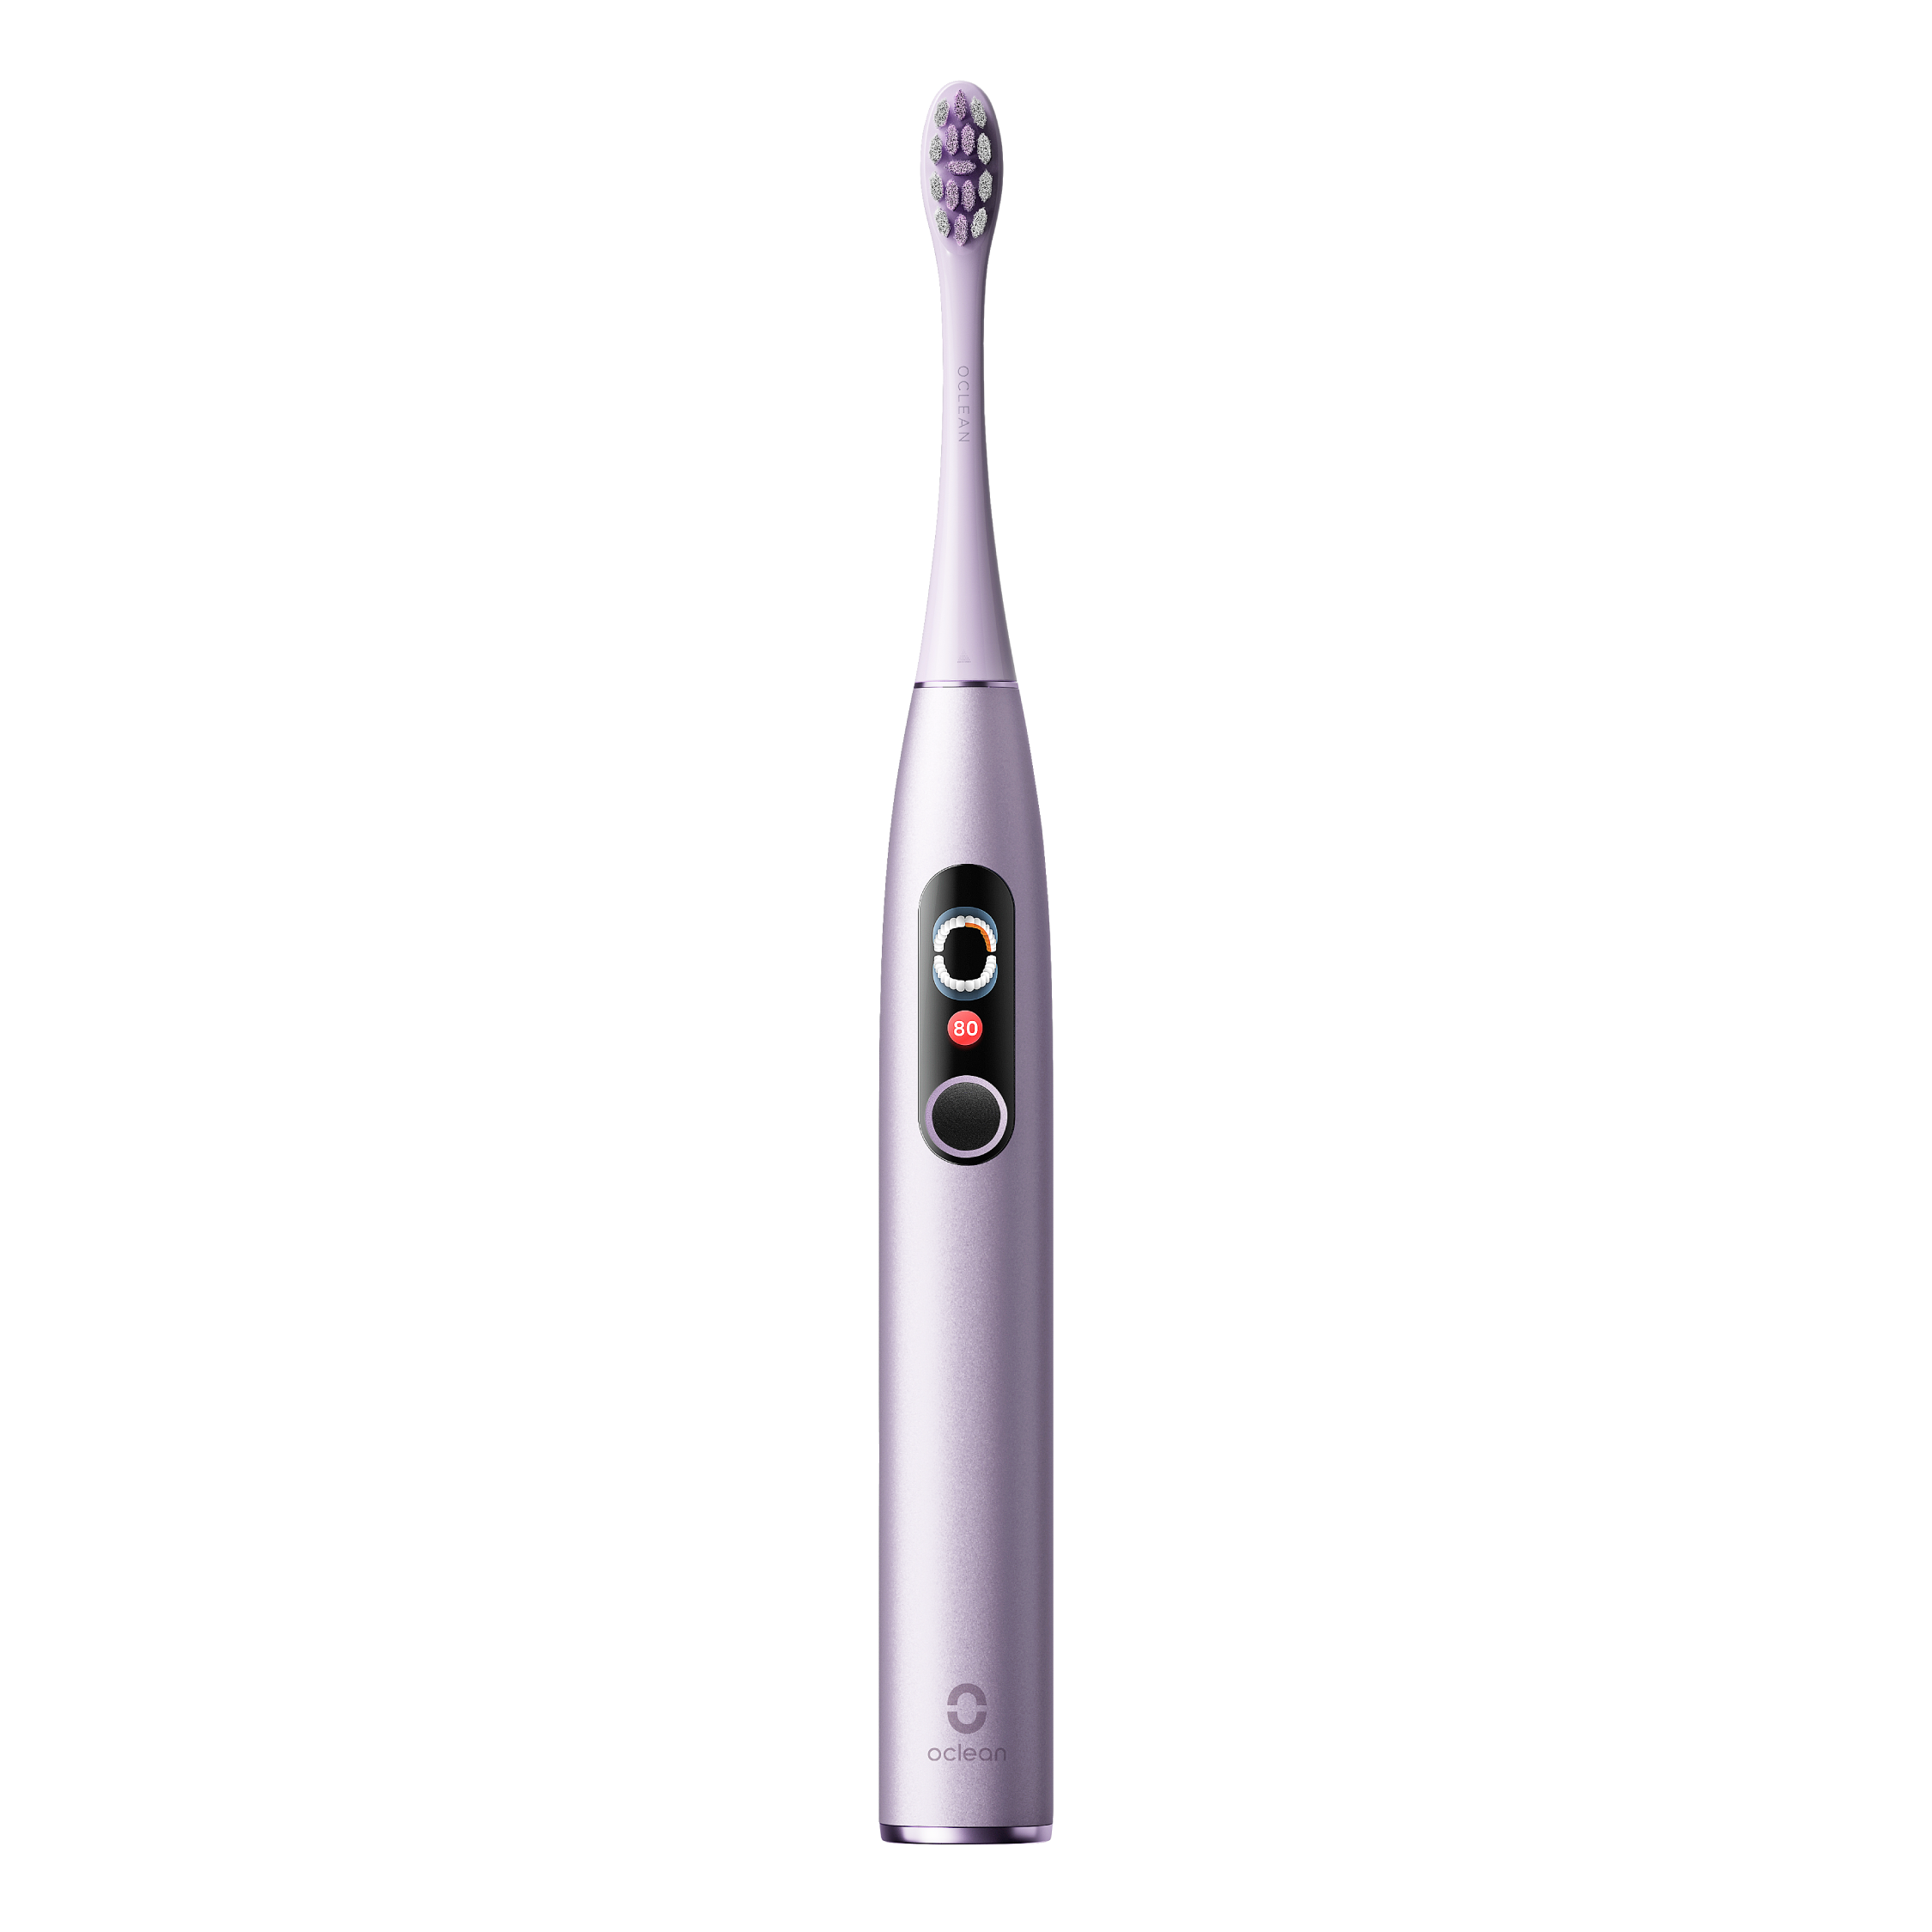 Oclean X Pro Digital Electric Sonic Toothbrush